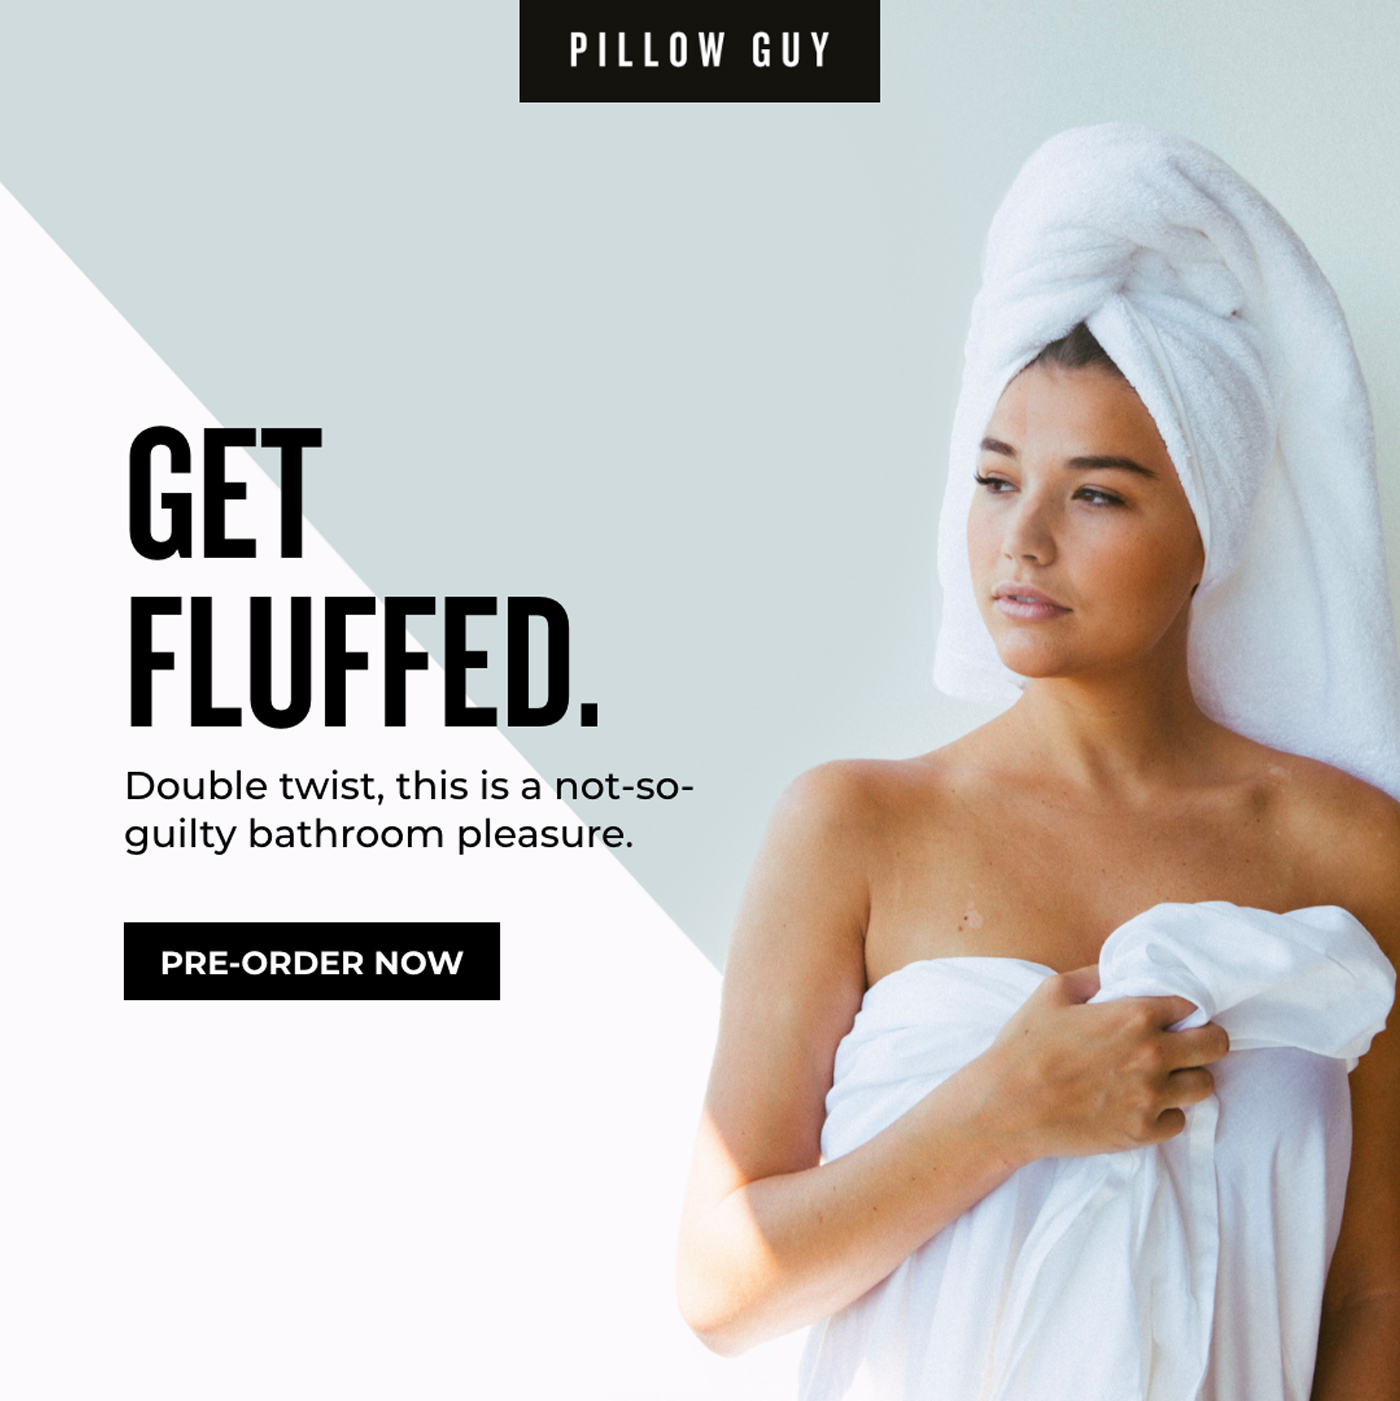 Pillow Guy Double Twist Facebook Ad Design